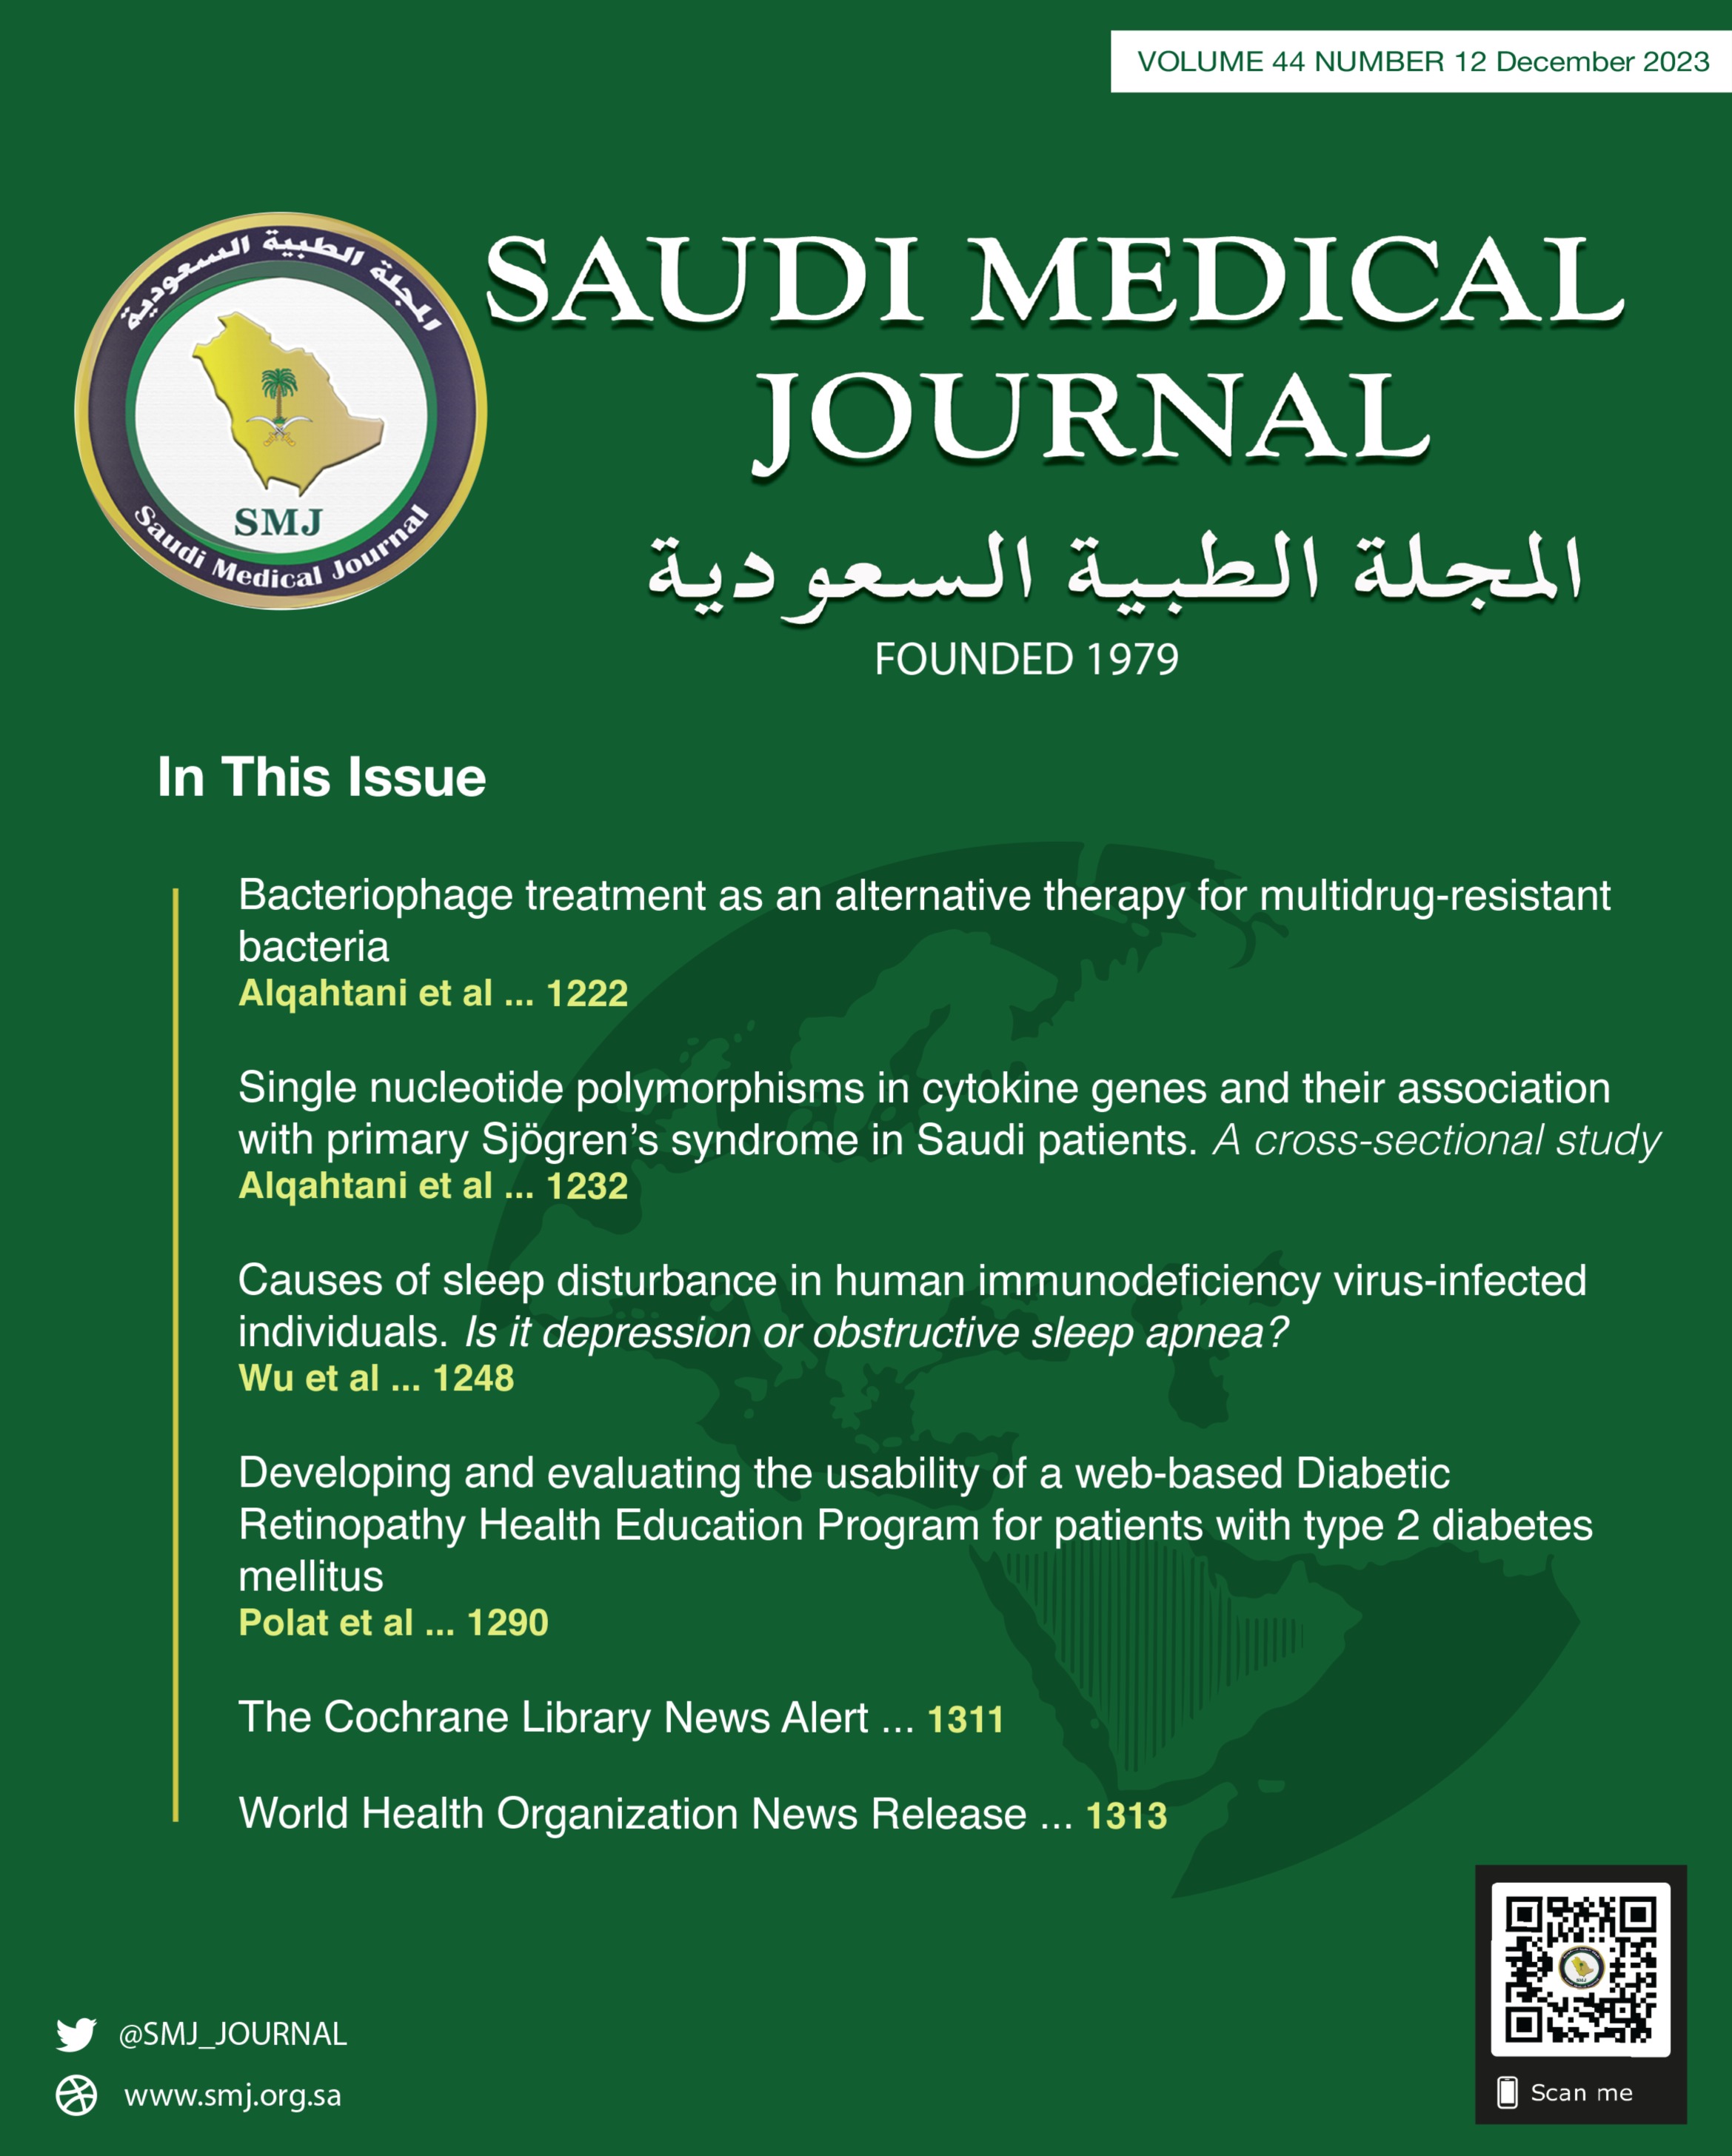 Effectiveness of generic sofosbuvir in the treatment of chronic hepatitis C virus infection in Saudi patients